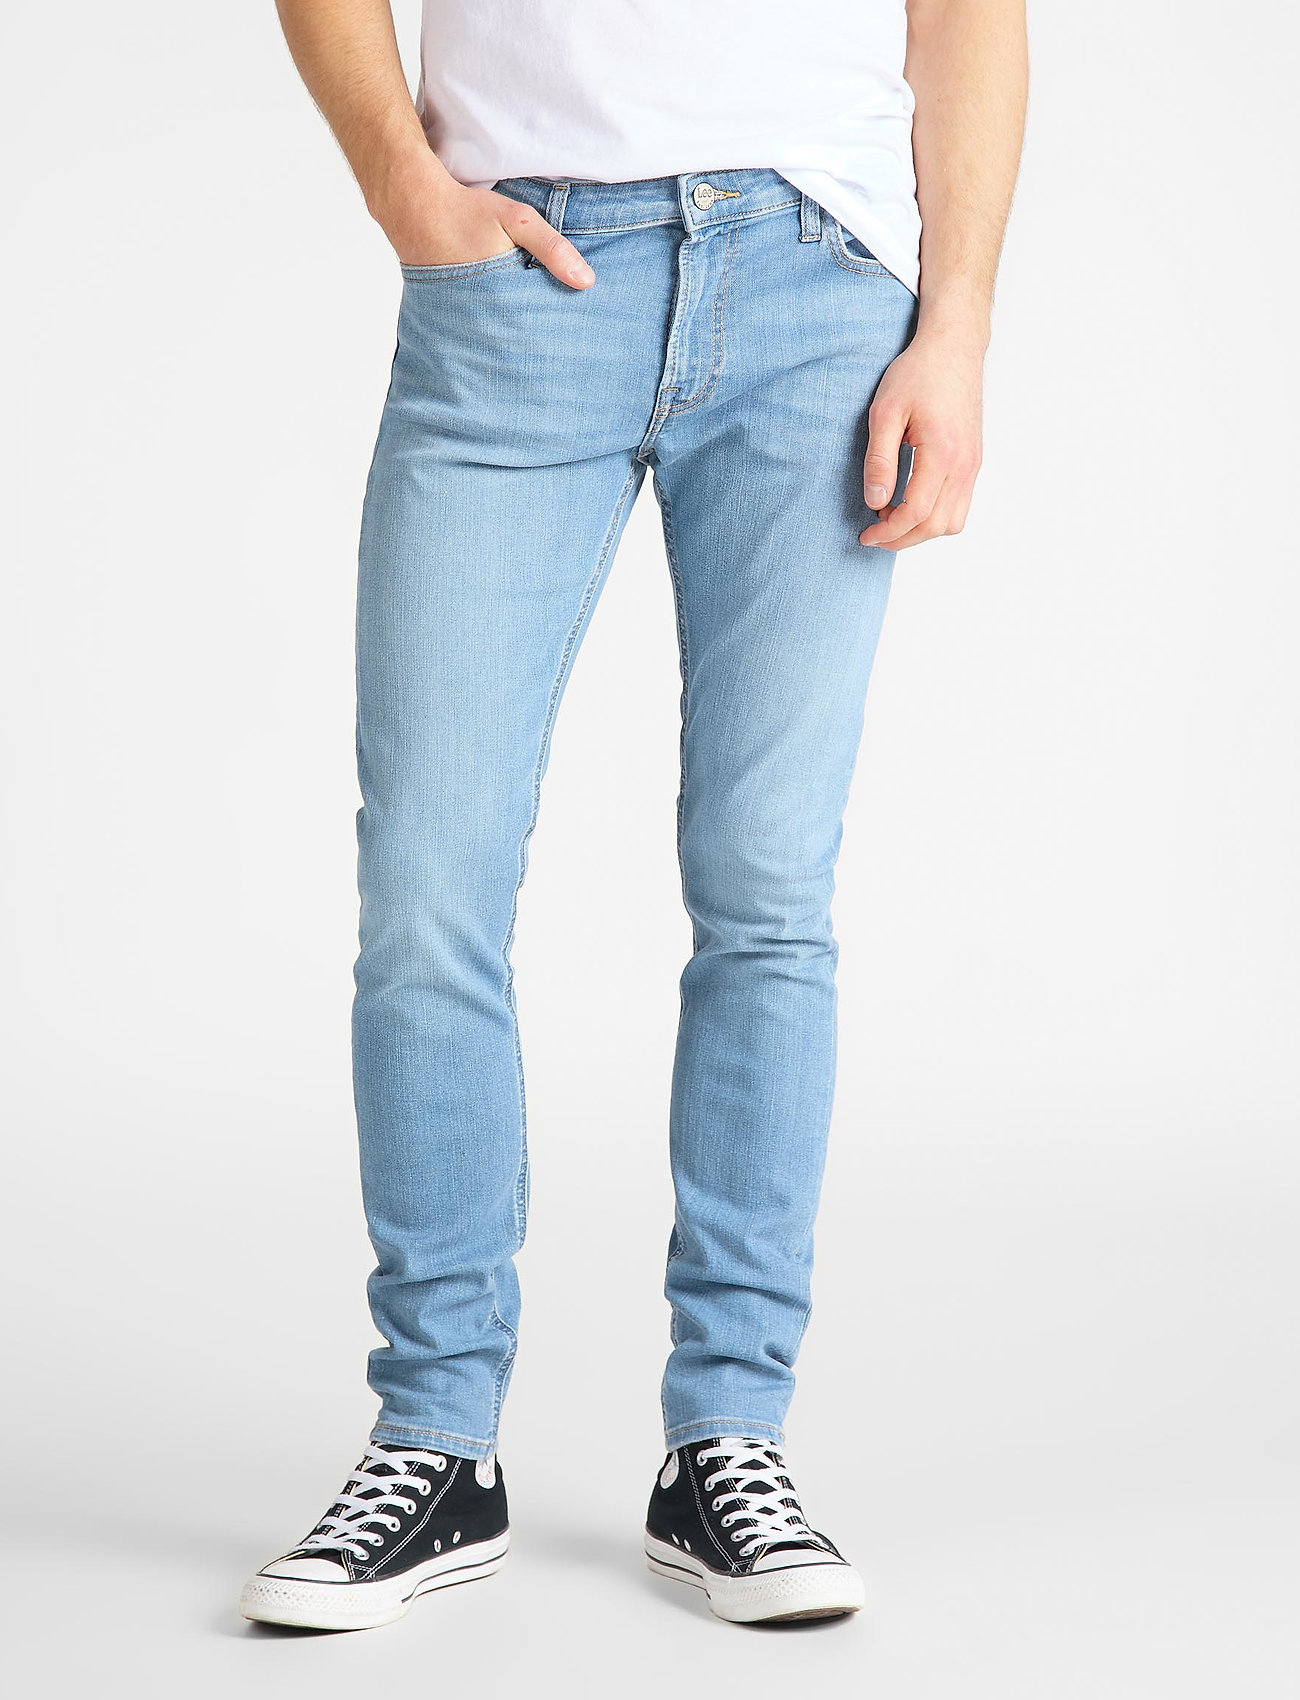 lee jeans malone skinny